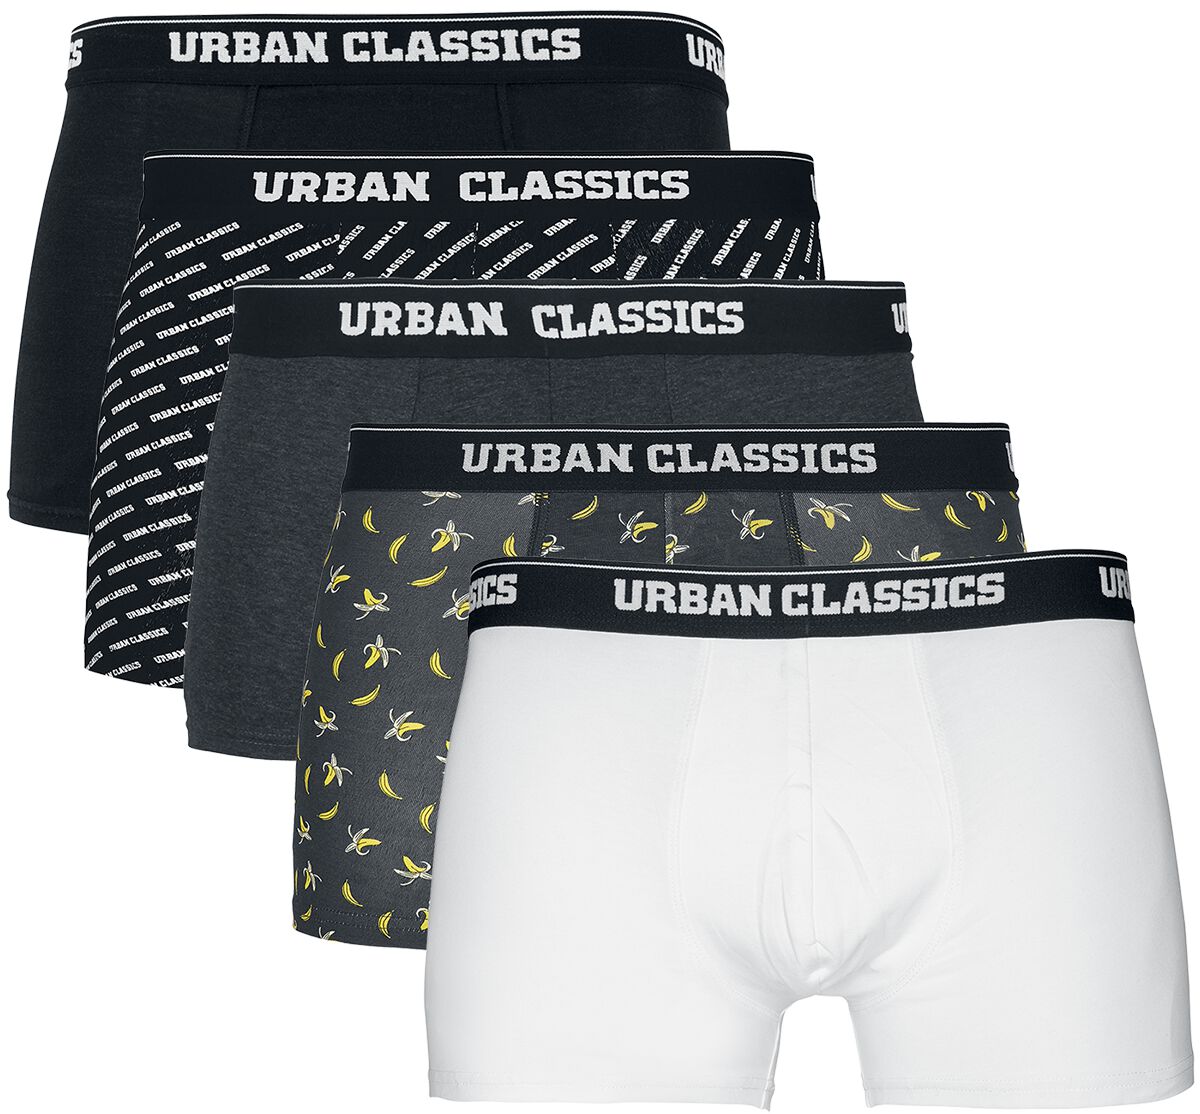 Urban Classics Boxer Shorts 5-Pack Boxershort-Set schwarz grau weiß in XXL